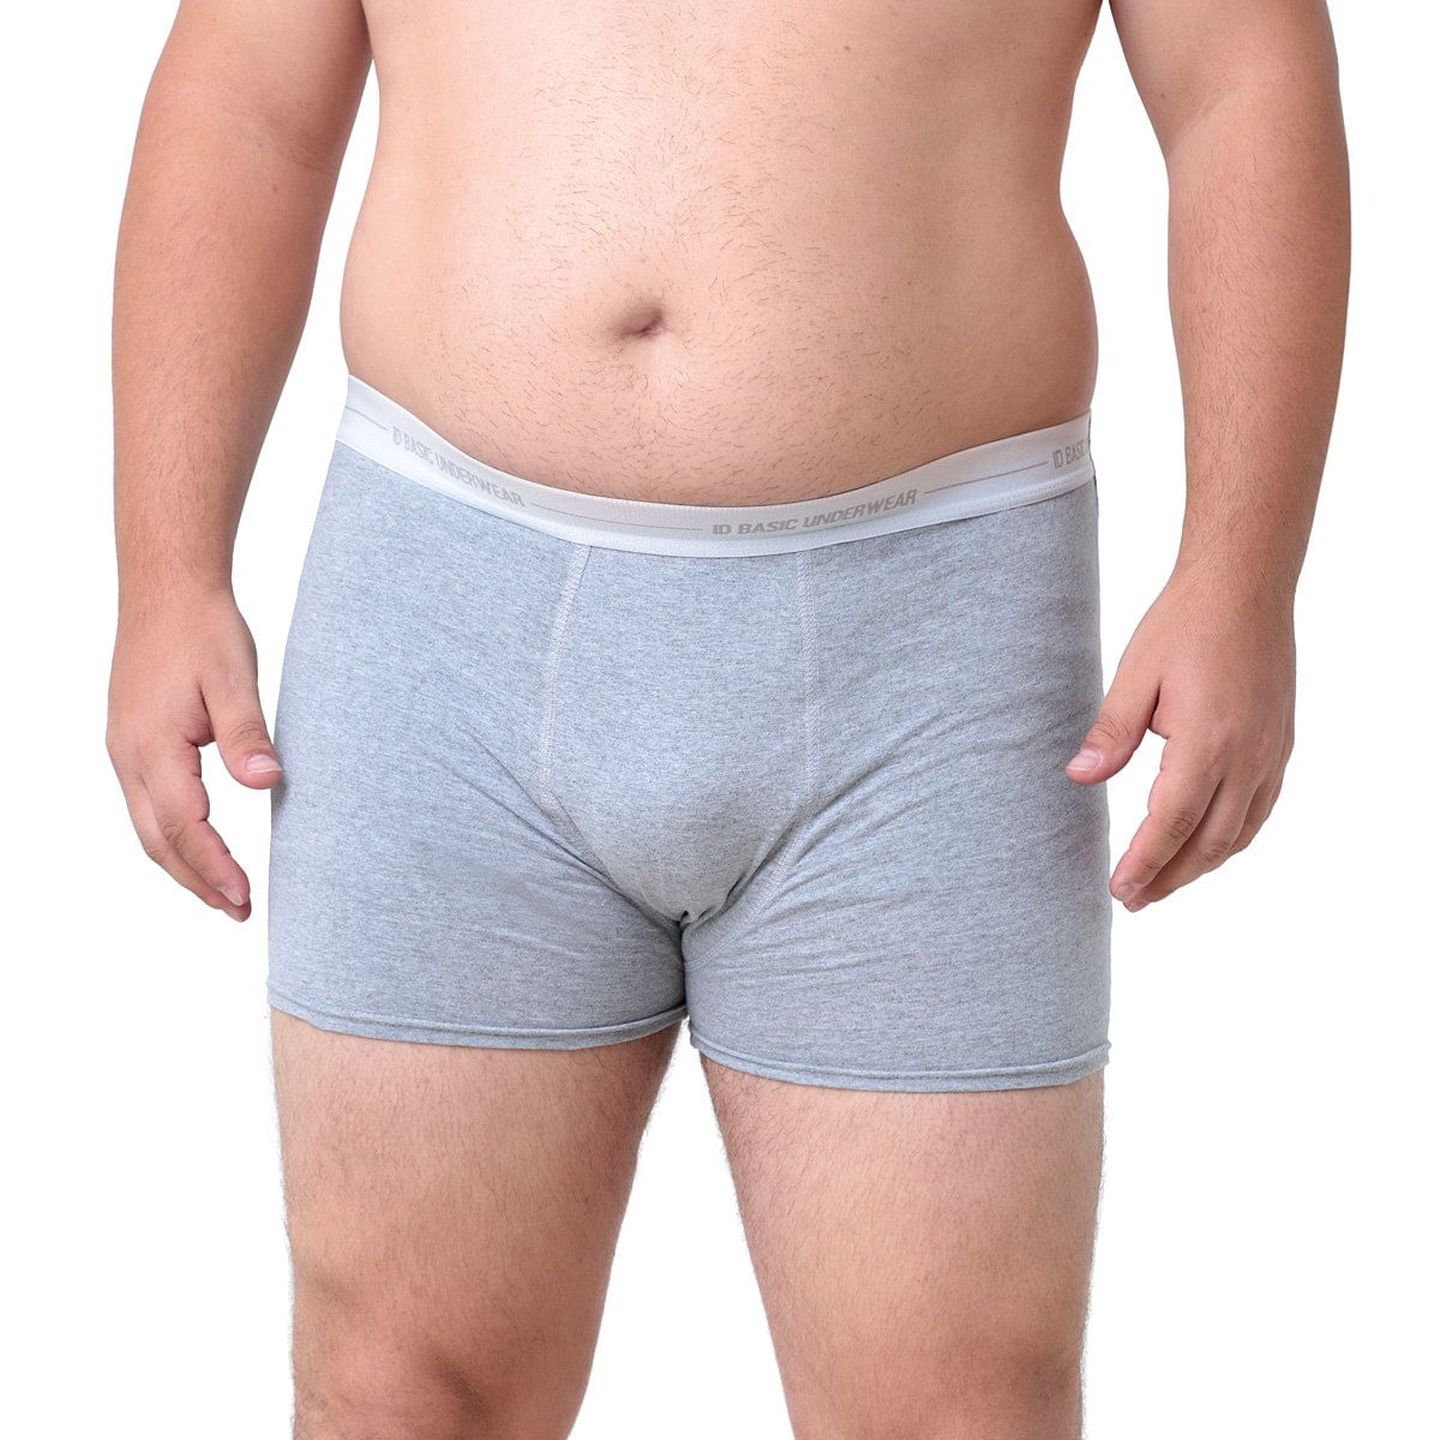 Kit com 5 Cueca Boxer Cotton Basic Casual Underwear